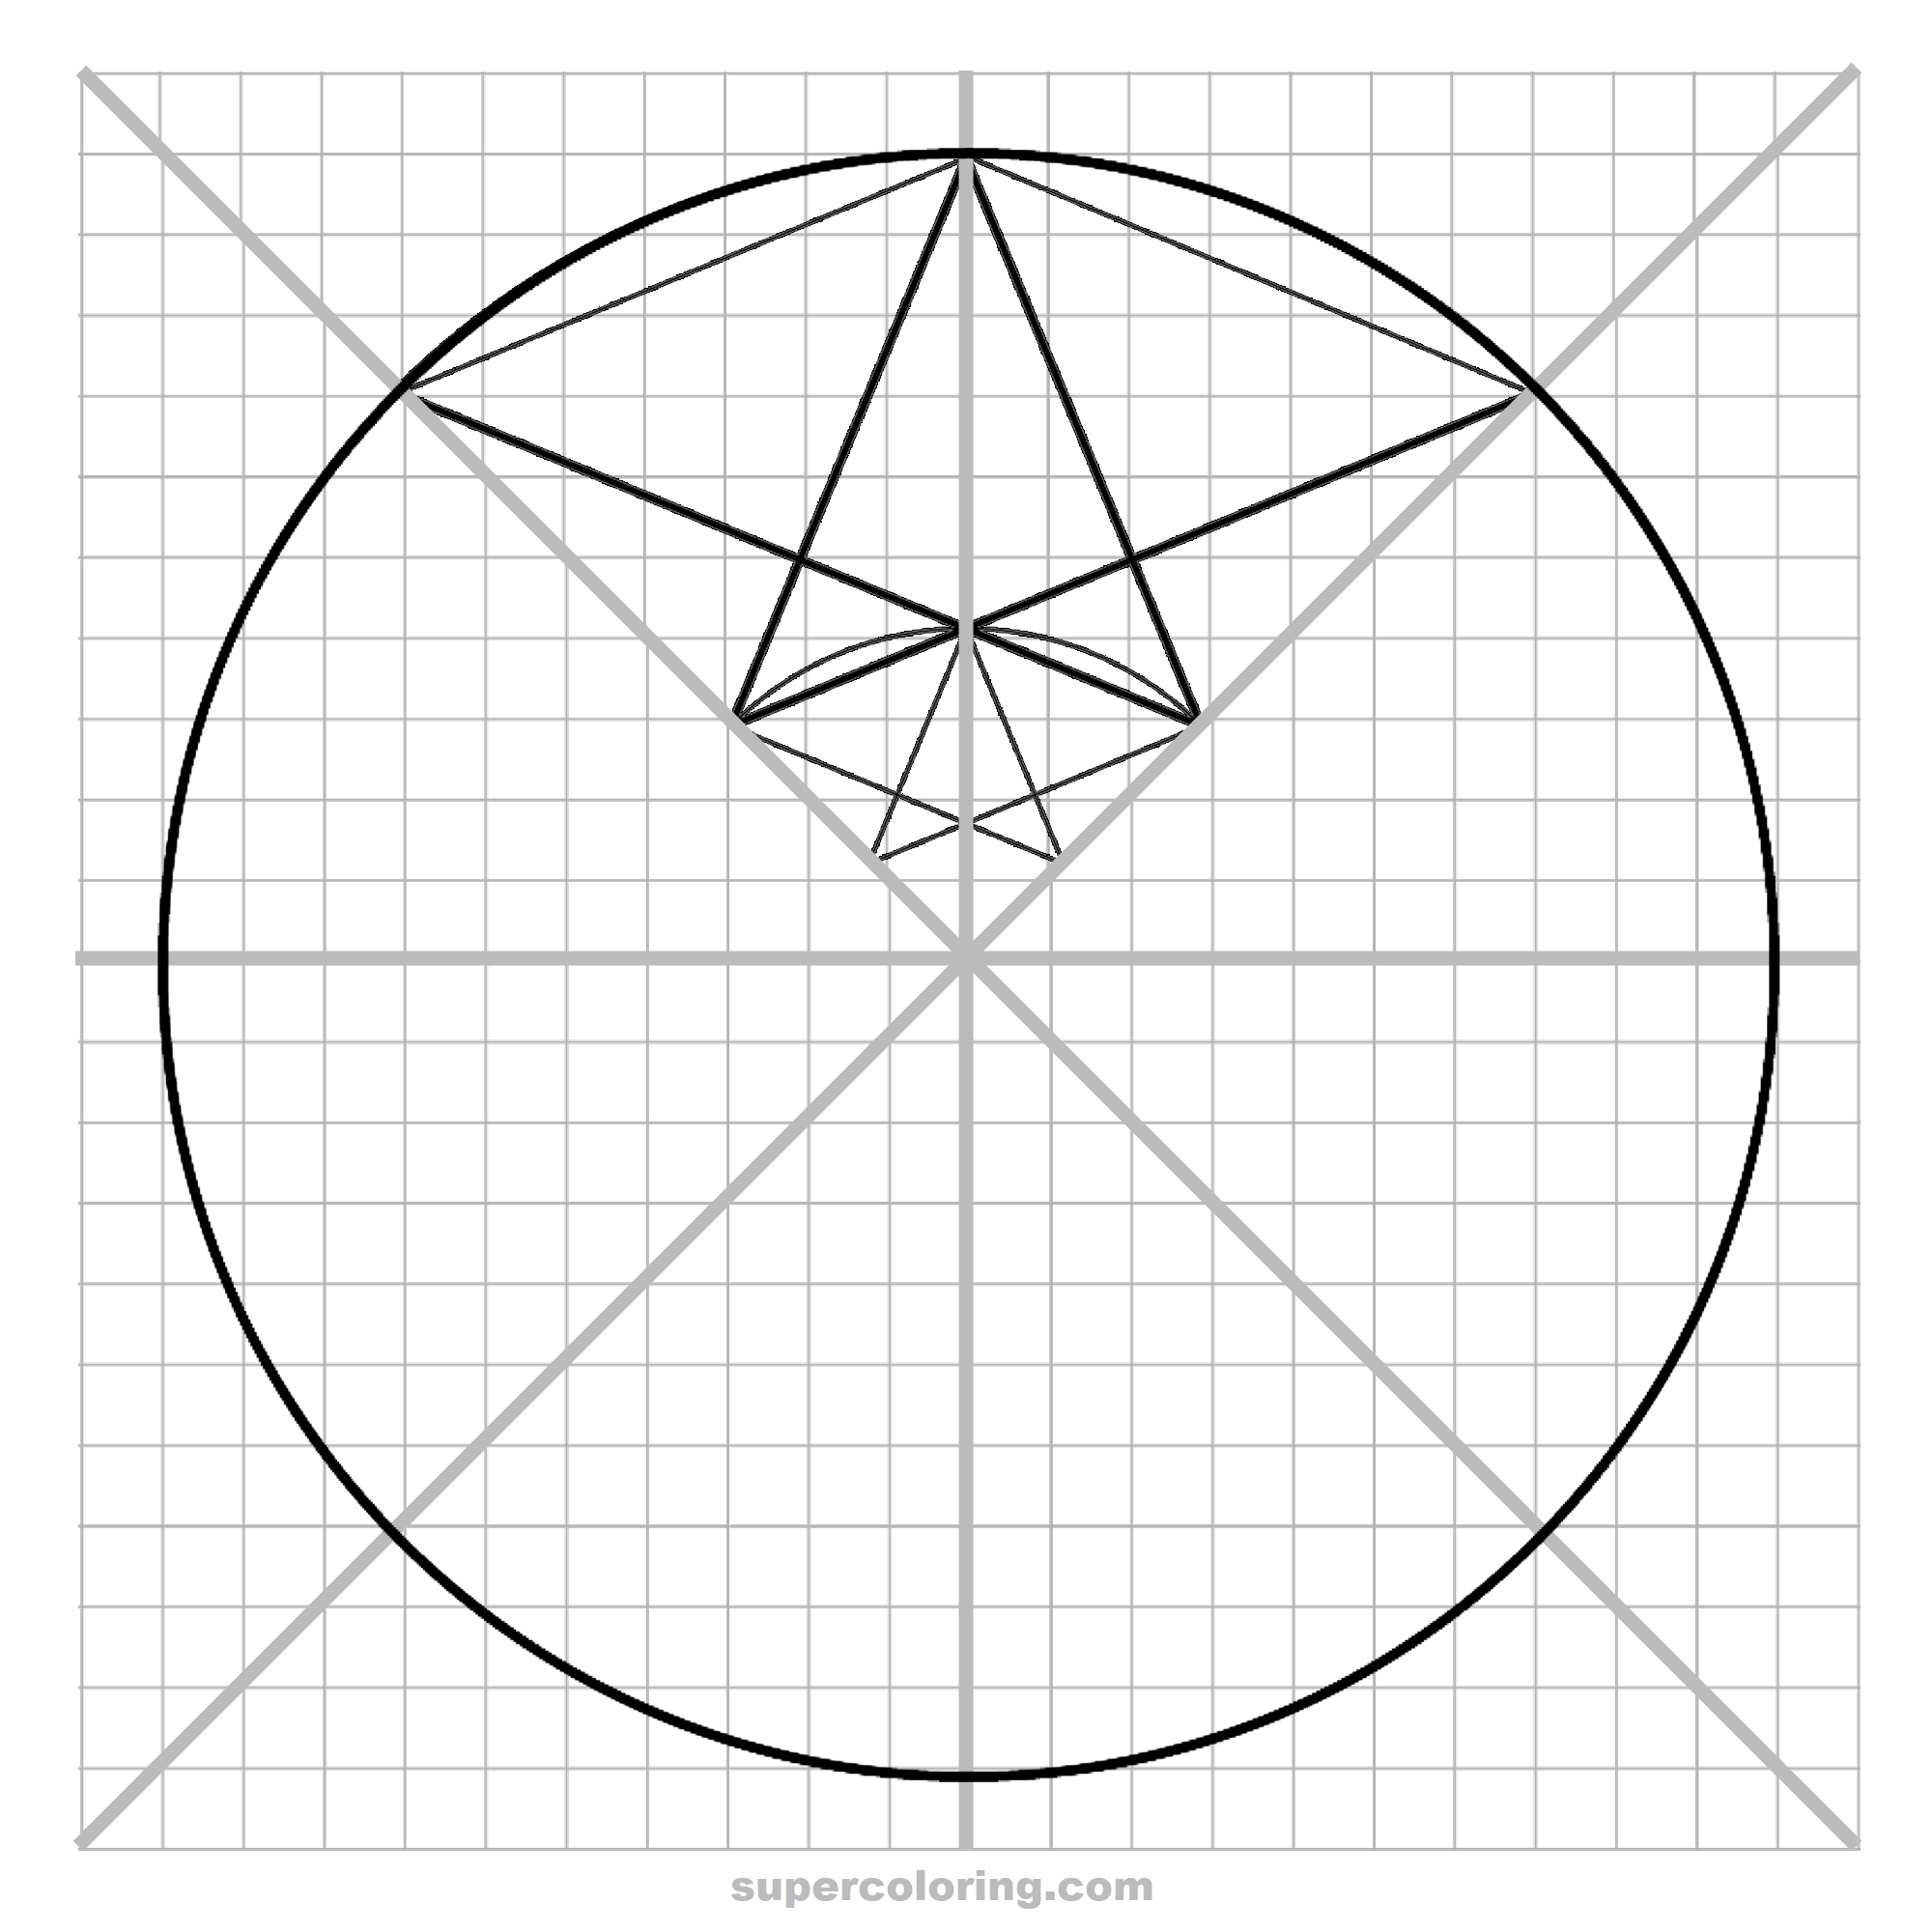 Mandala with octagram radial symmetry worksheet free printable puzzle games